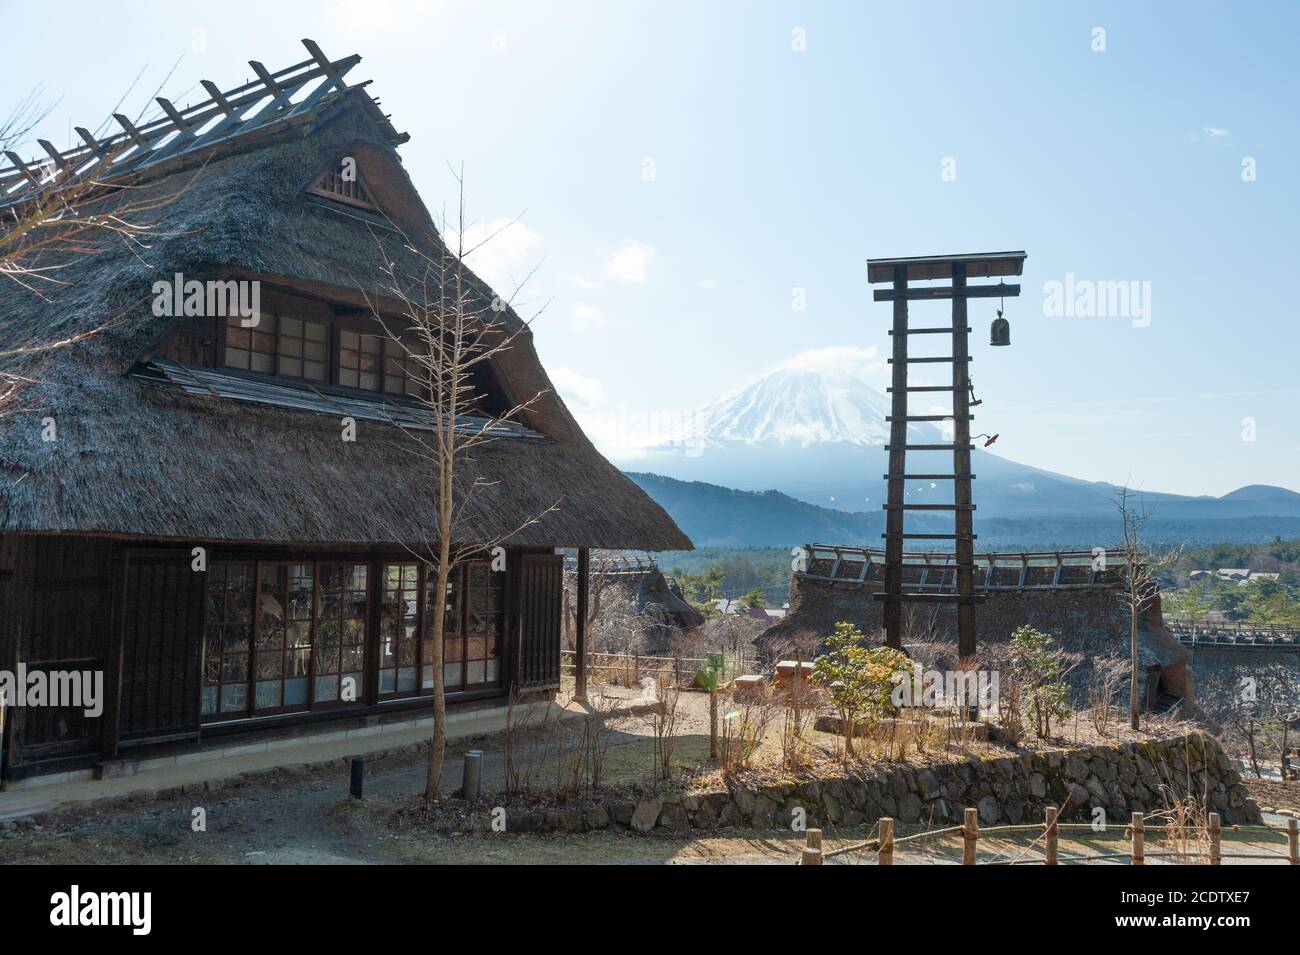 Reetdachhaus mit Glocke daneben im alten japanischen Dorf Saiko Iyashino-Sato Nenba (Heildorf). Stockfoto